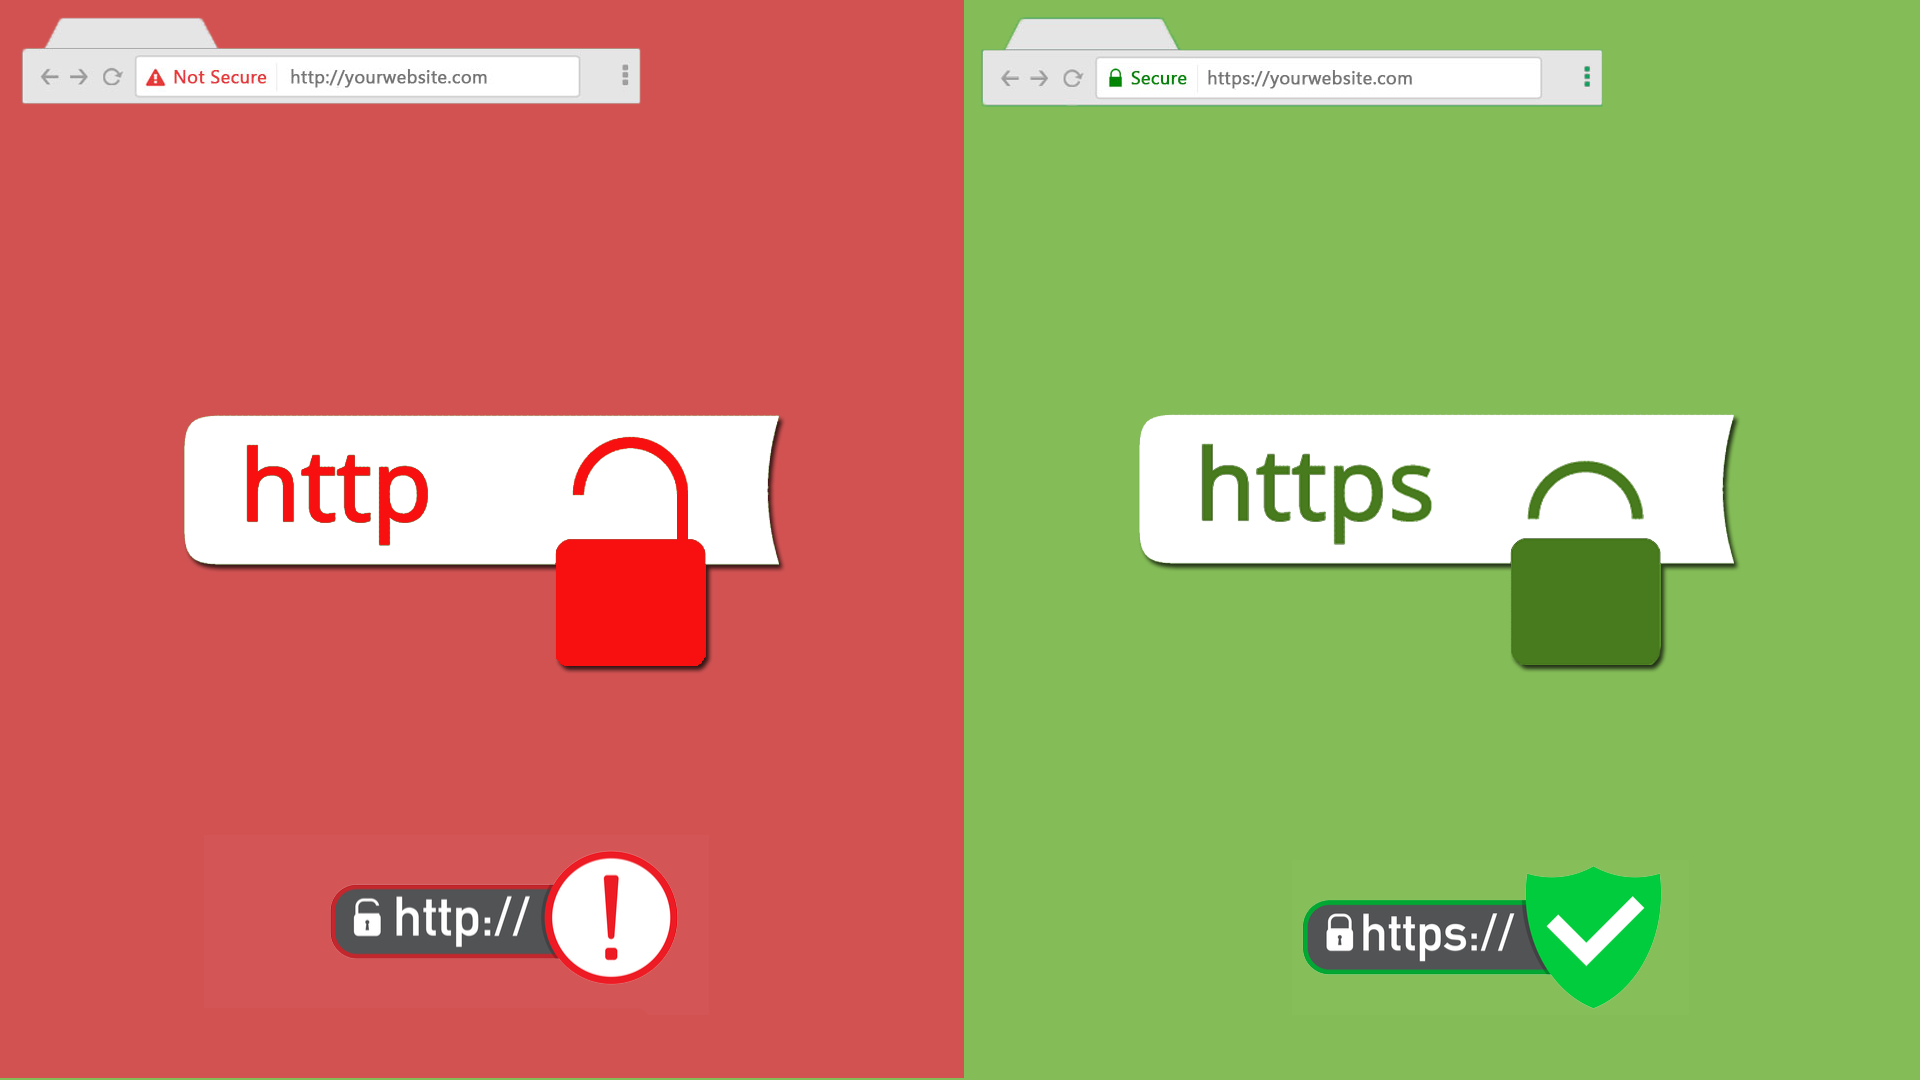 HTTP-HTTPS